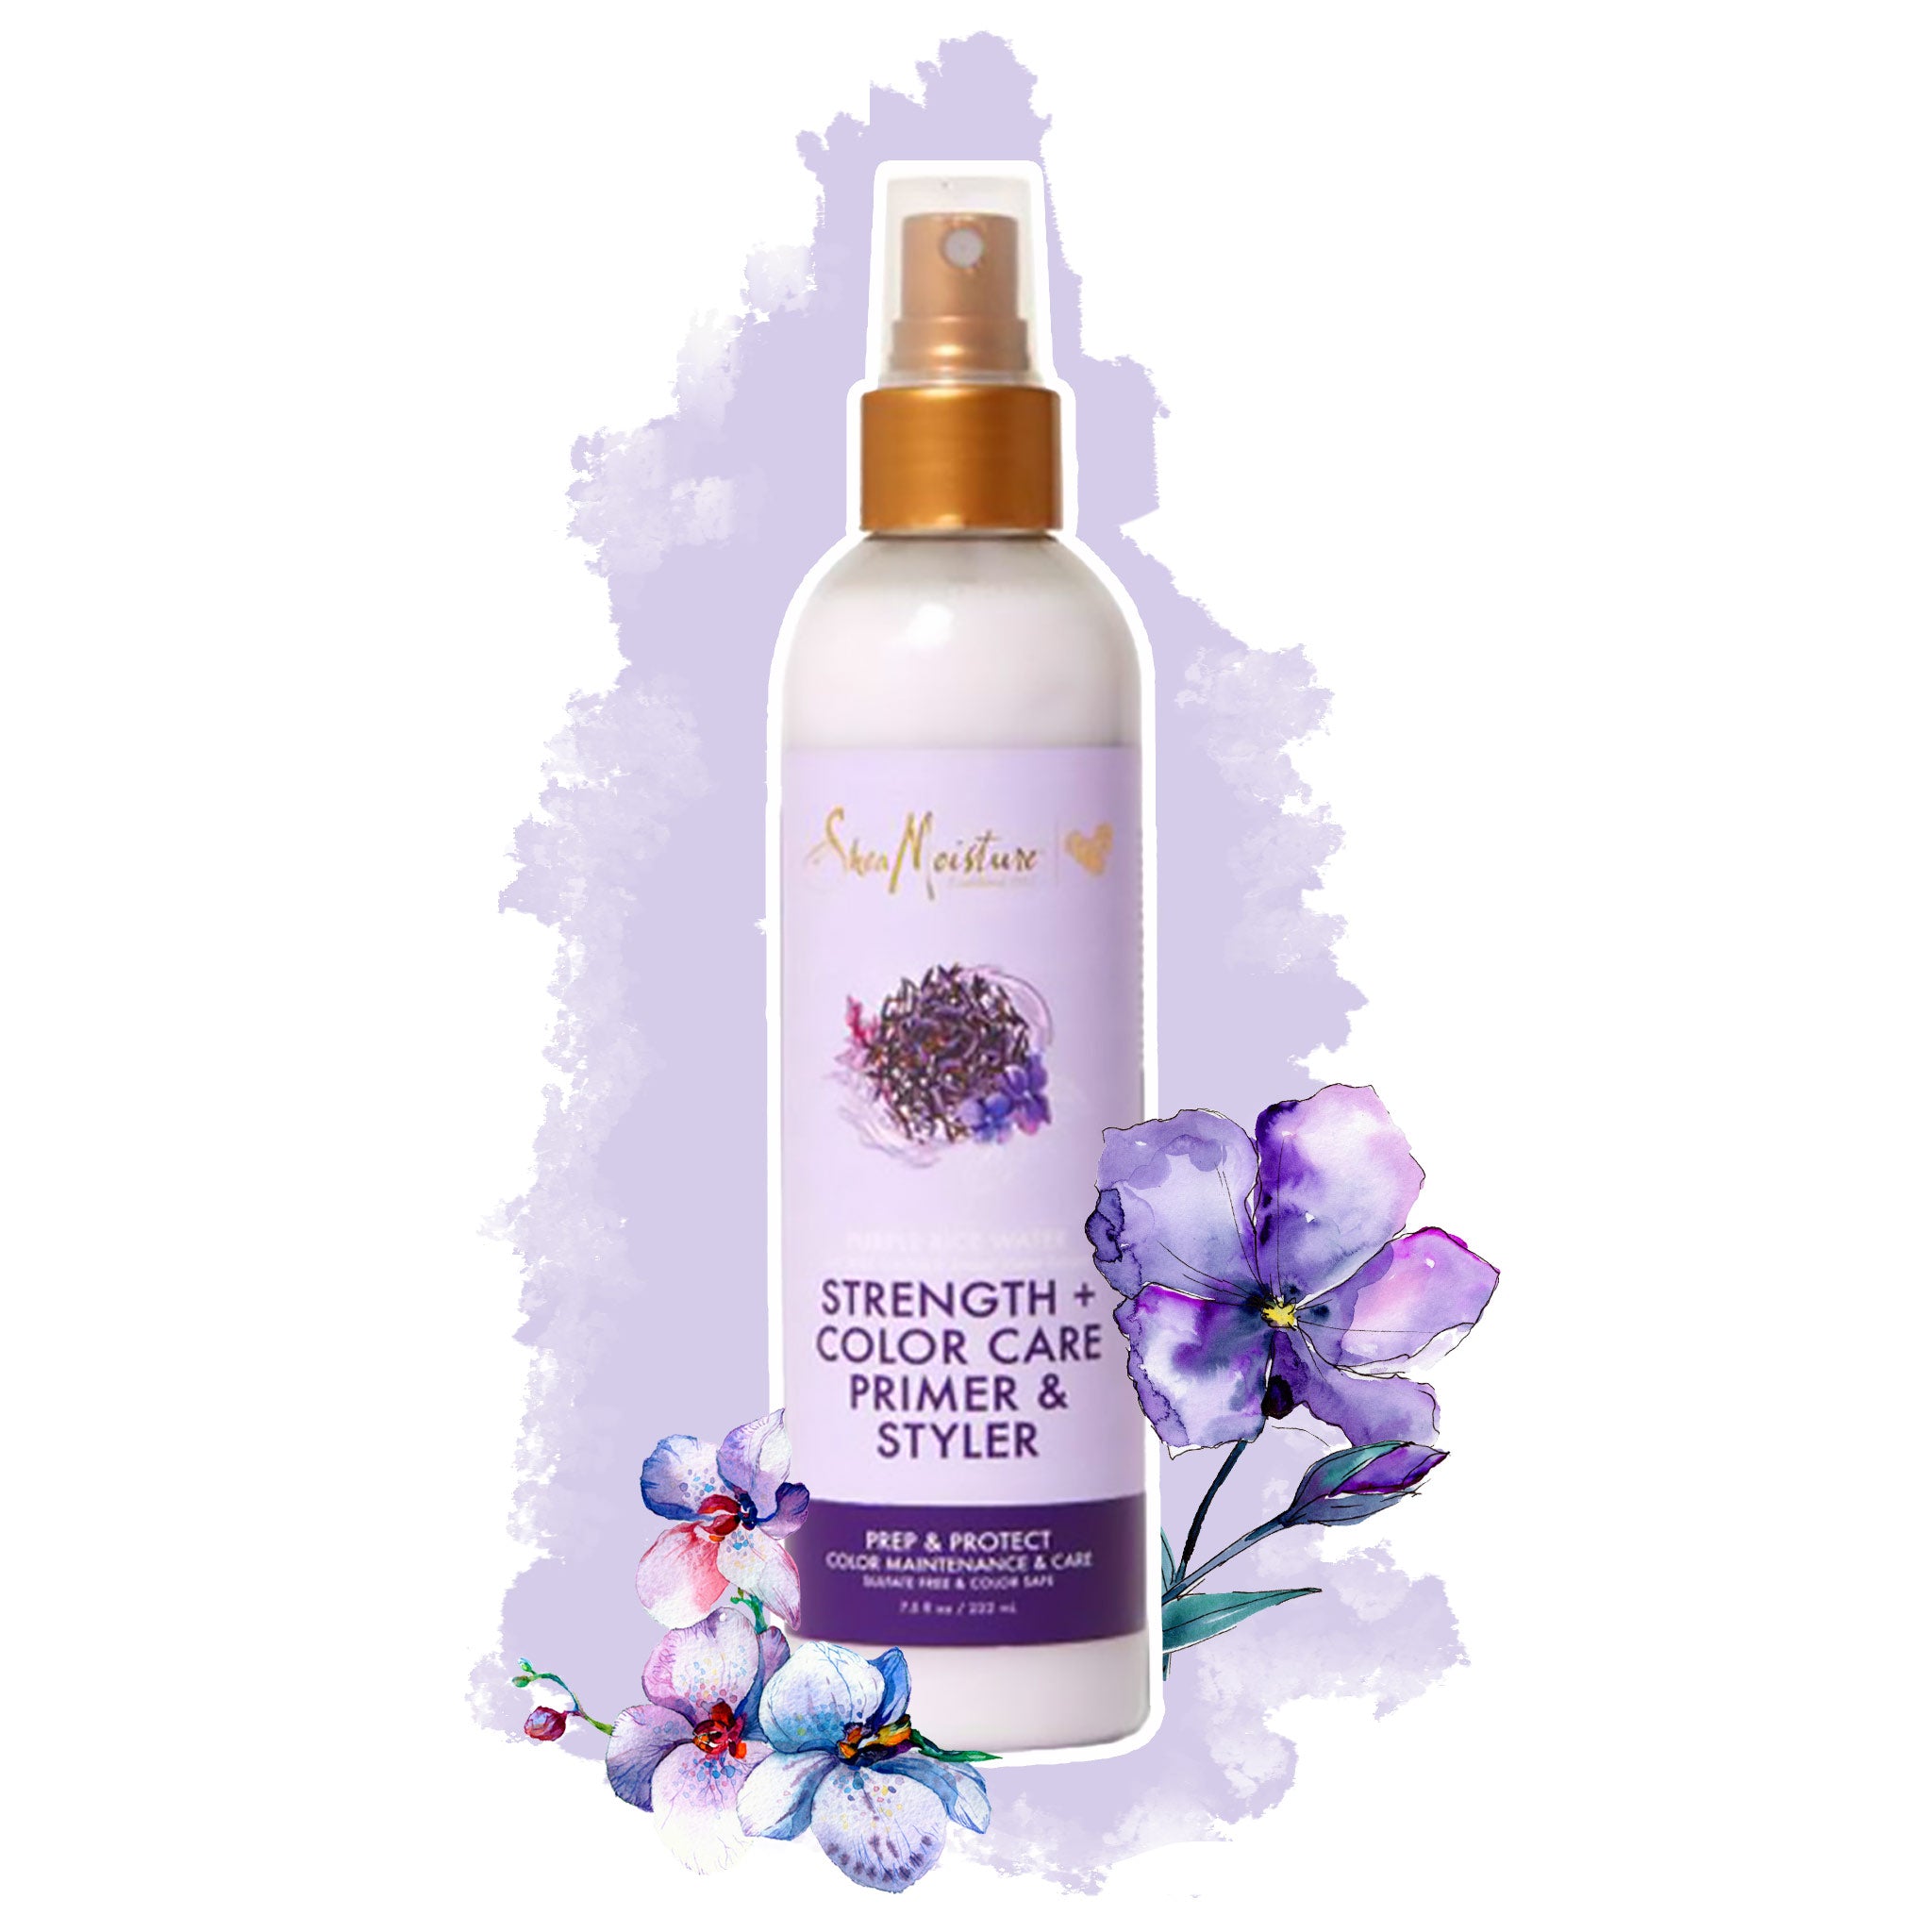 lockenkopf-Shea-Moisture-purple-rice-wild-orchid-sweet-violet-extract-strength-color-care-primer-styler.jpg